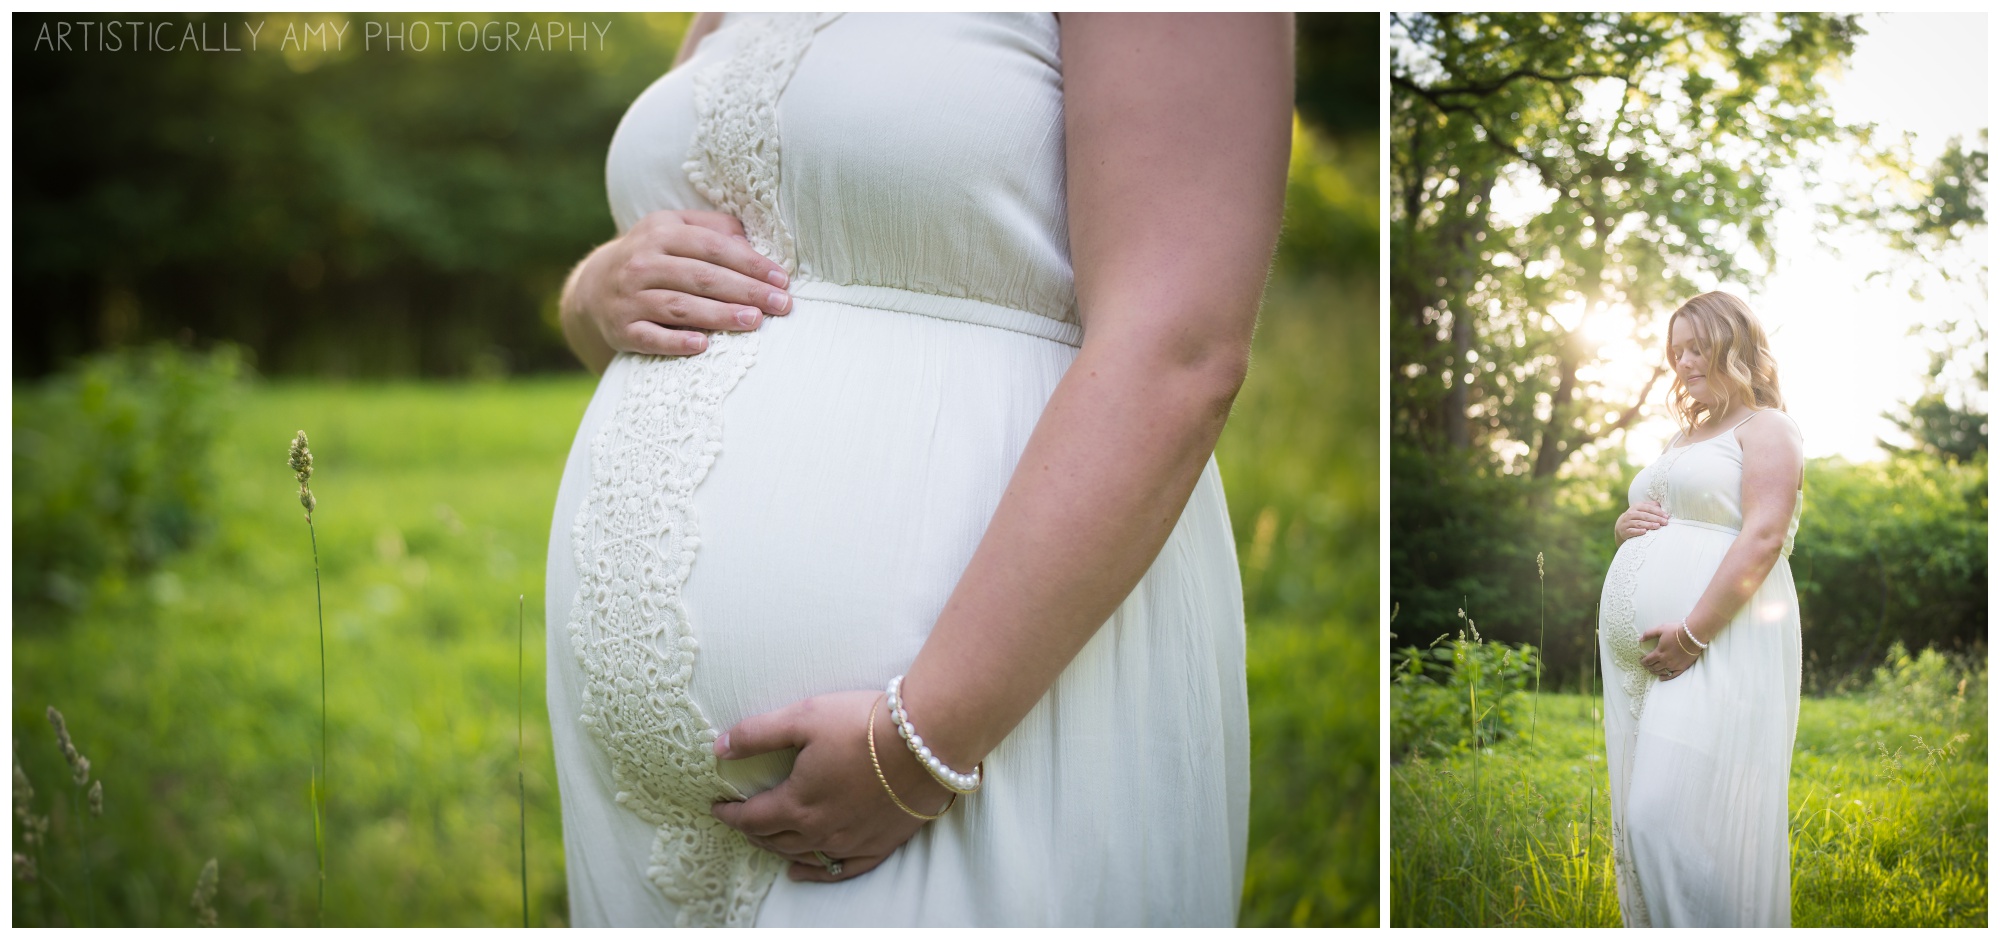 Dutchess County Maternity Photography